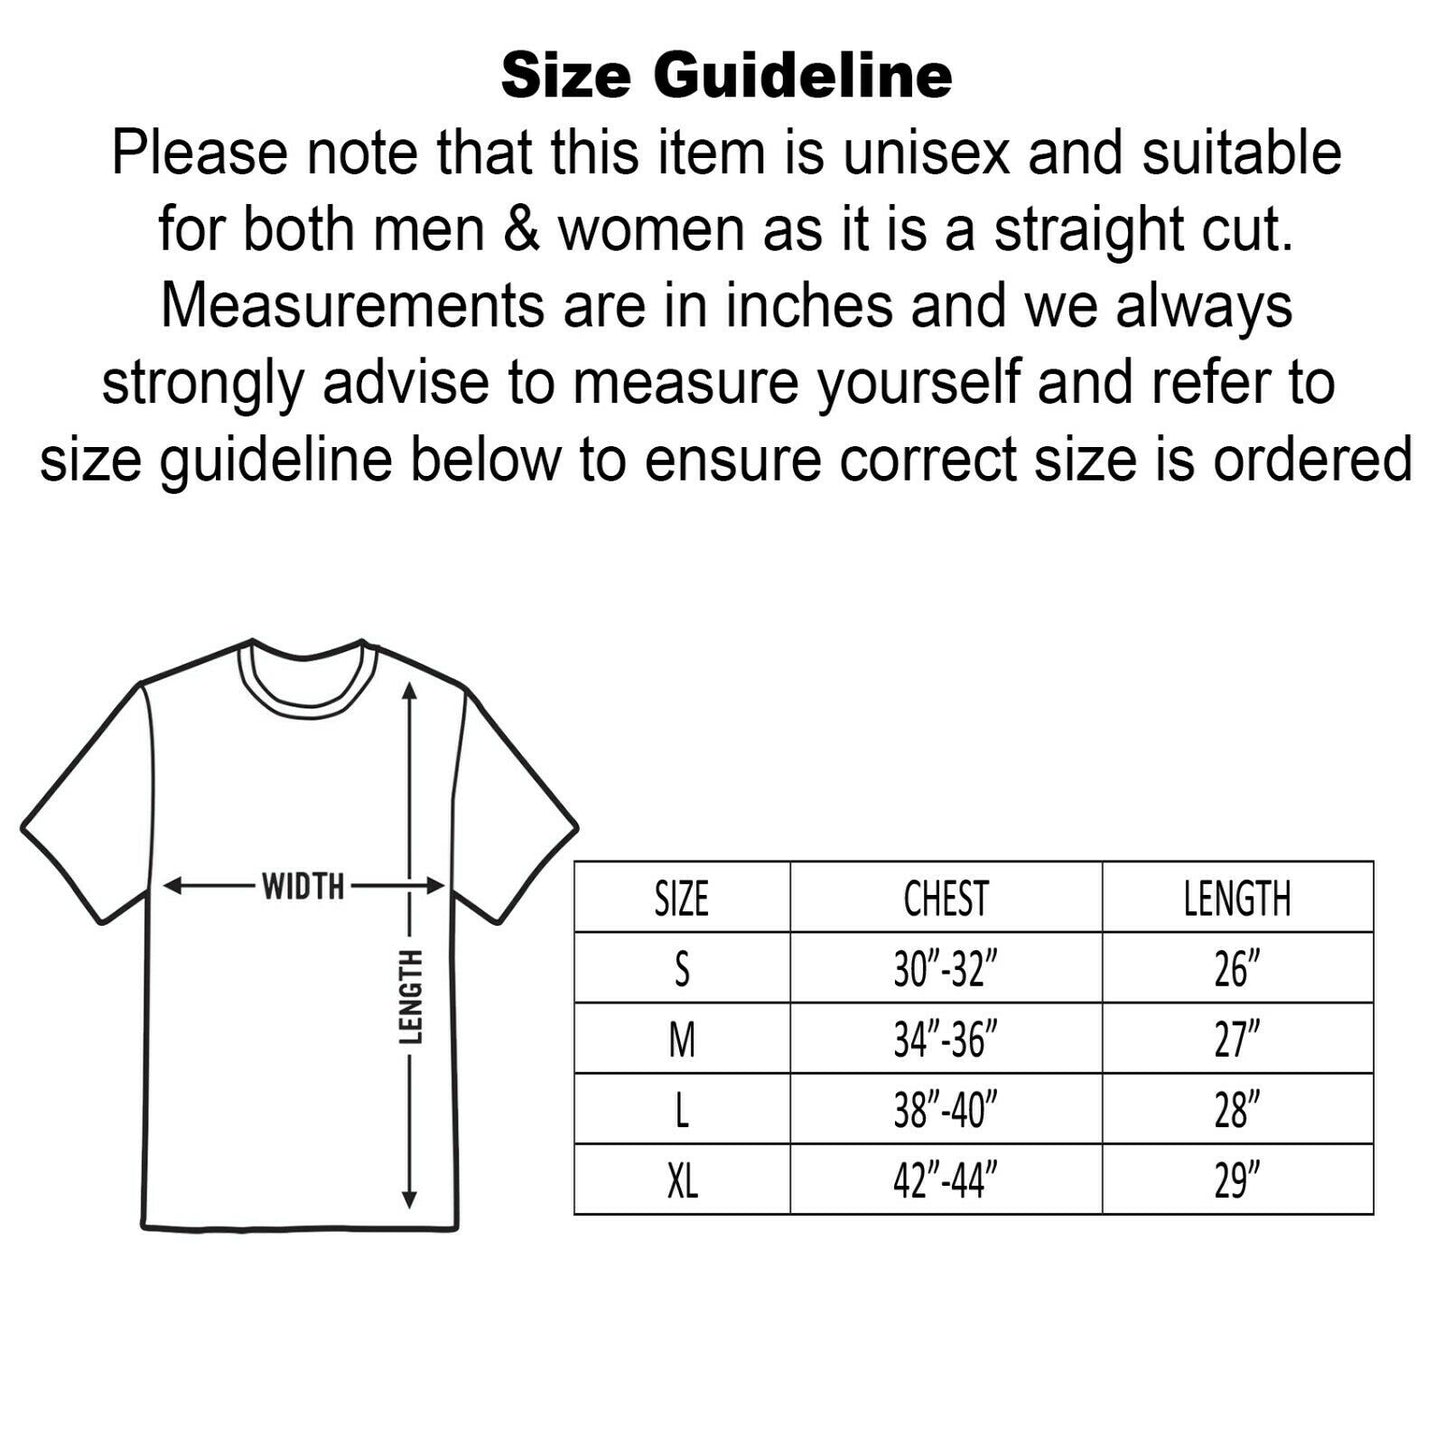 Unisex Thin Lizzy Raglan 3/4 Sleeve Baseball T-Shirt